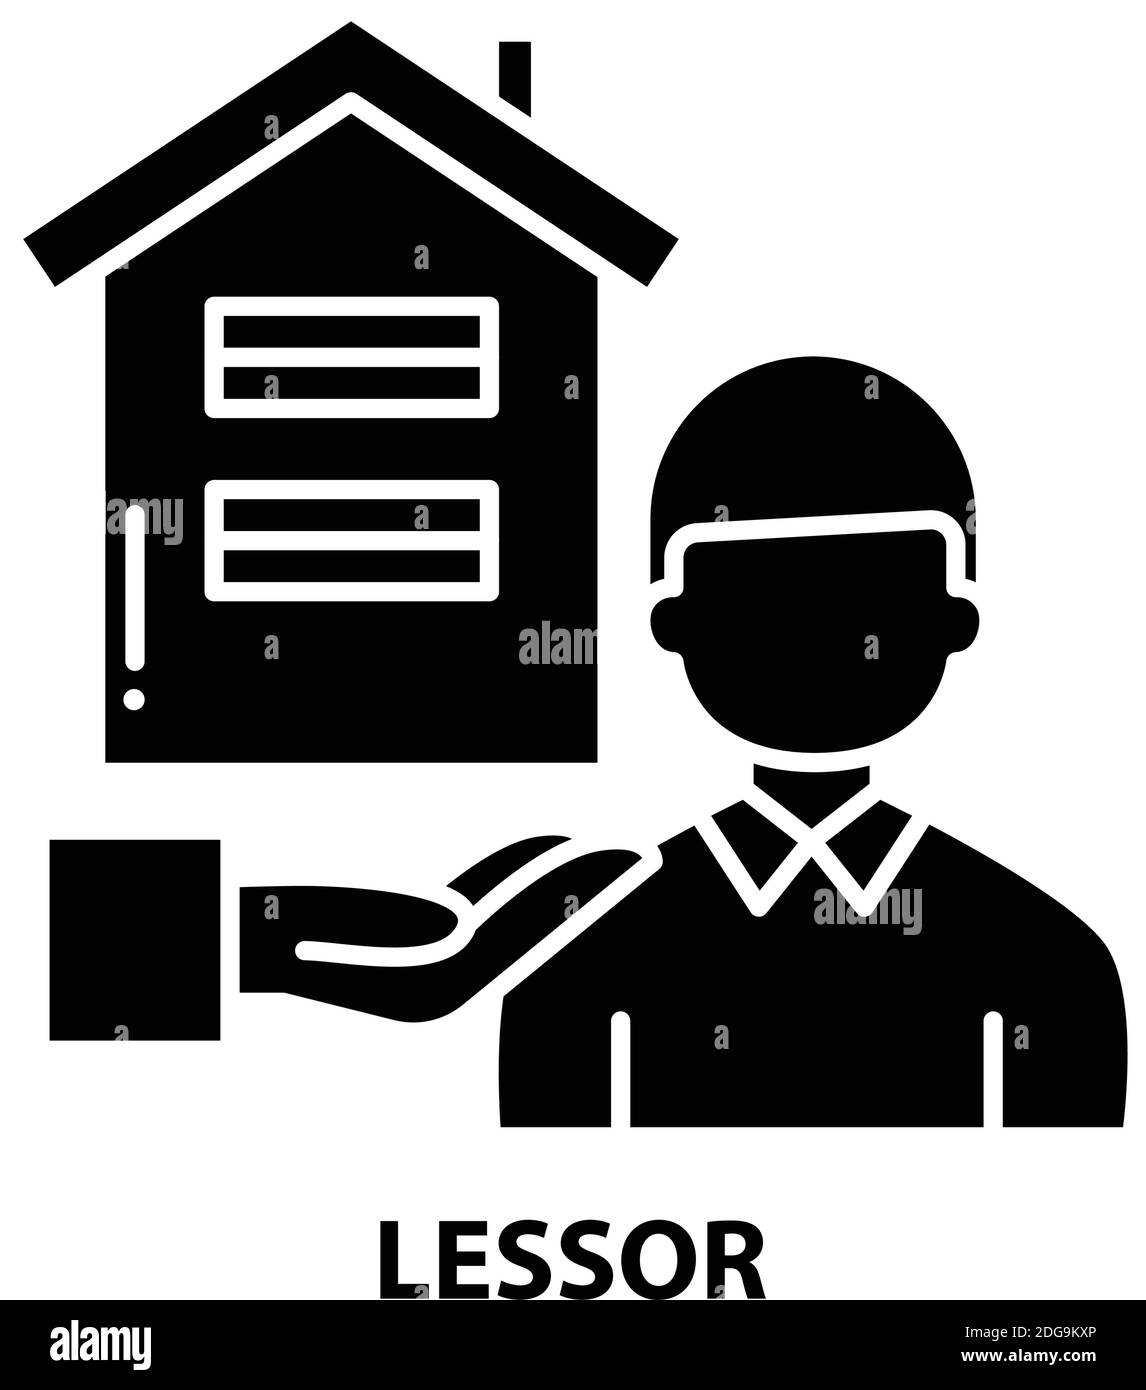 lessor icon, black vector sign with editable strokes, concept illustration Stock Vector